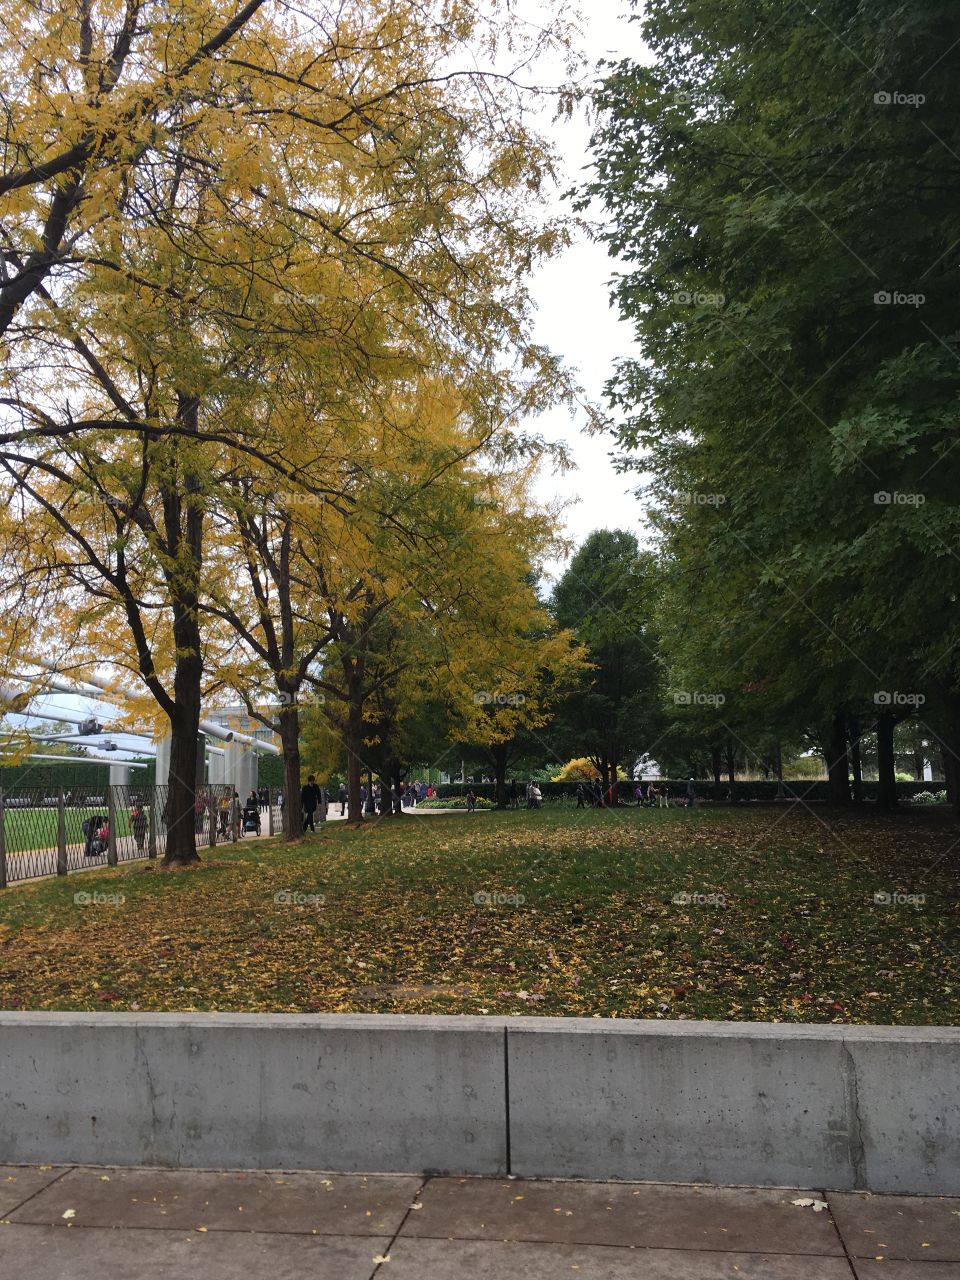 Autumn in the park 